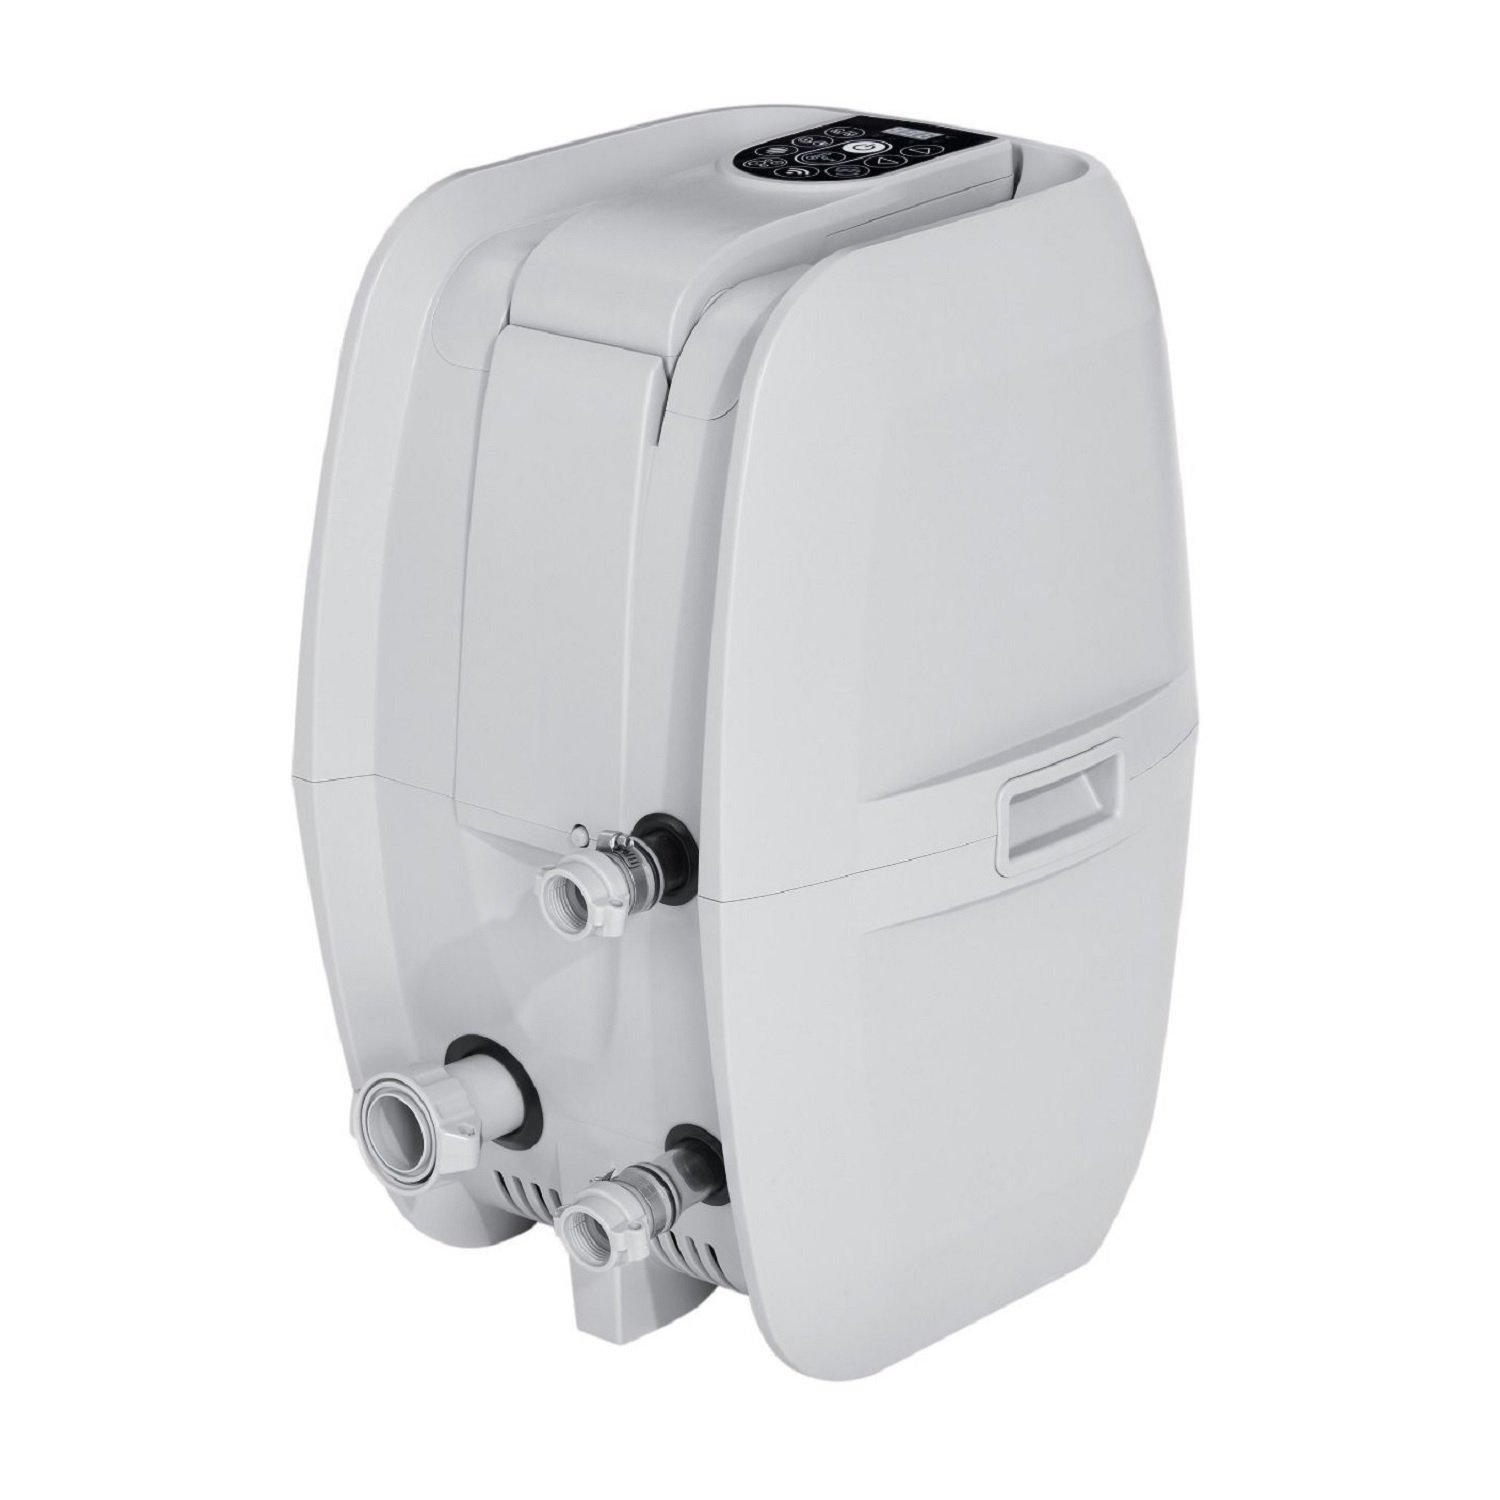 Heater Pump Unit With Freeze Shield Technology  UK Plug